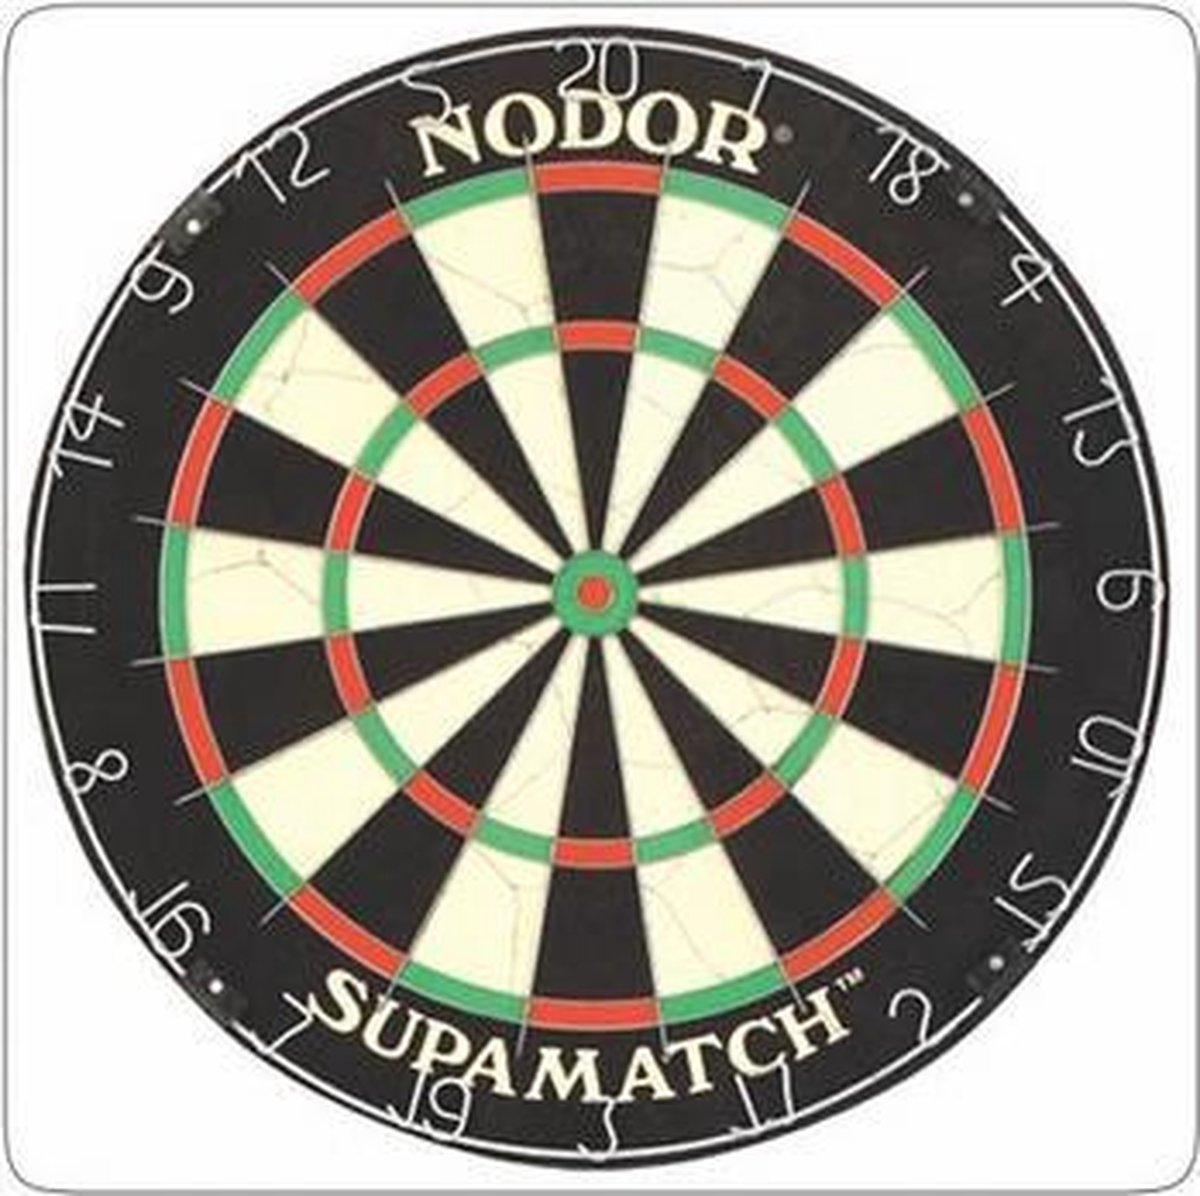 Nodor Supamatch III Dartboard Per stuk